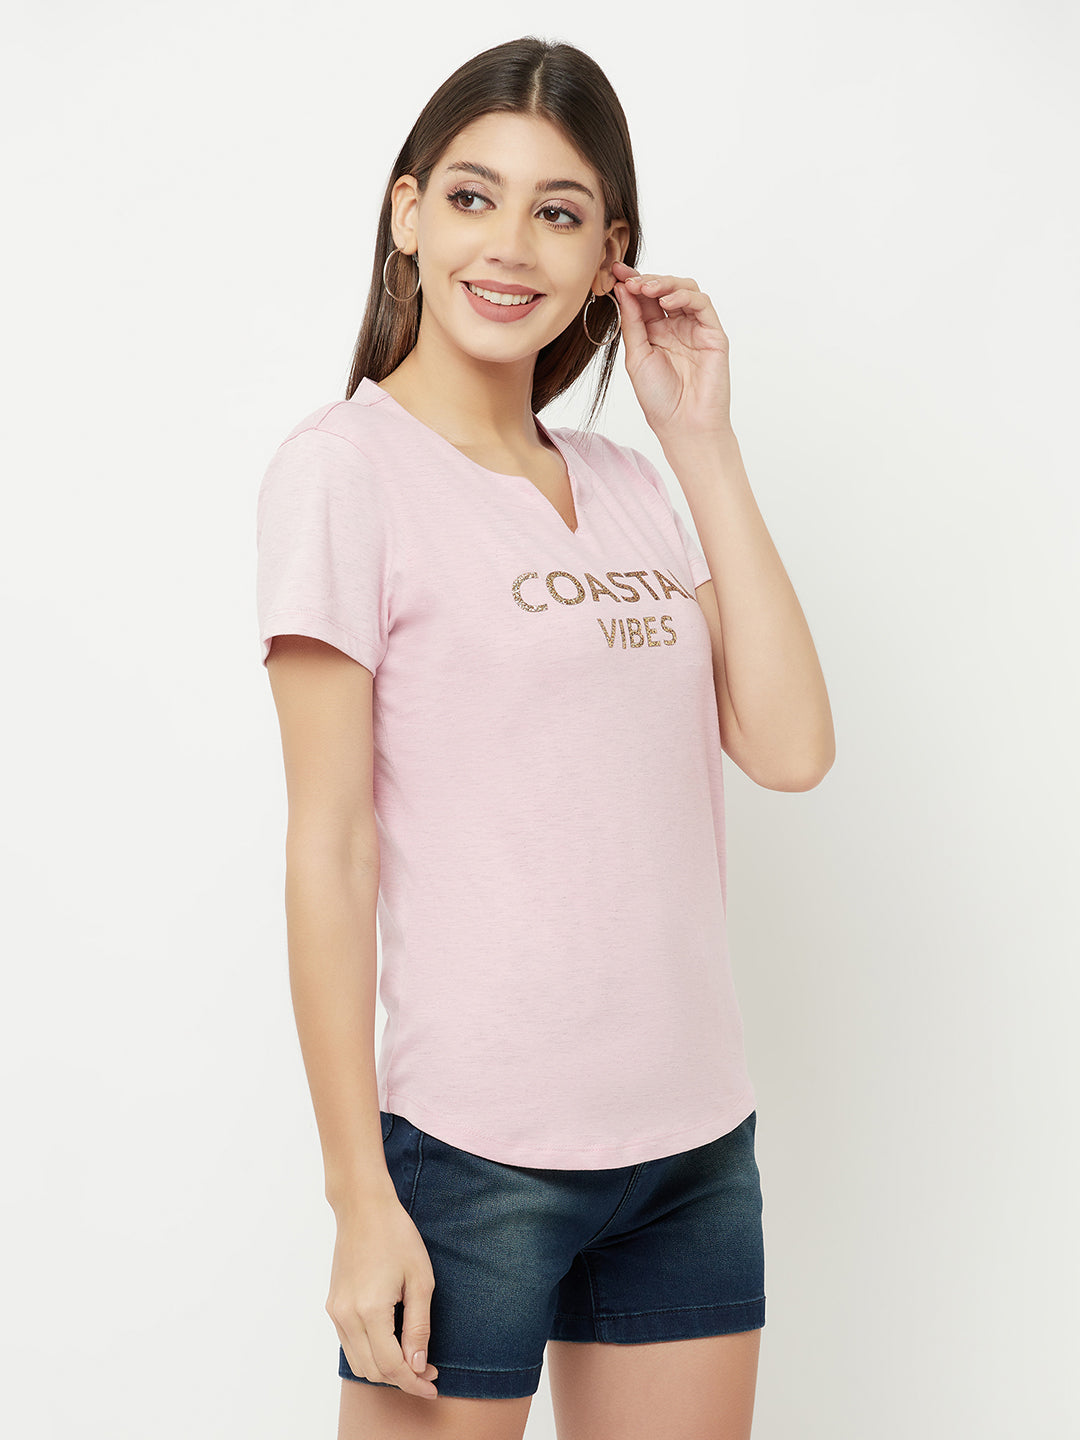 Pink Printed Round Neck T-Shirt - Women T-Shirts